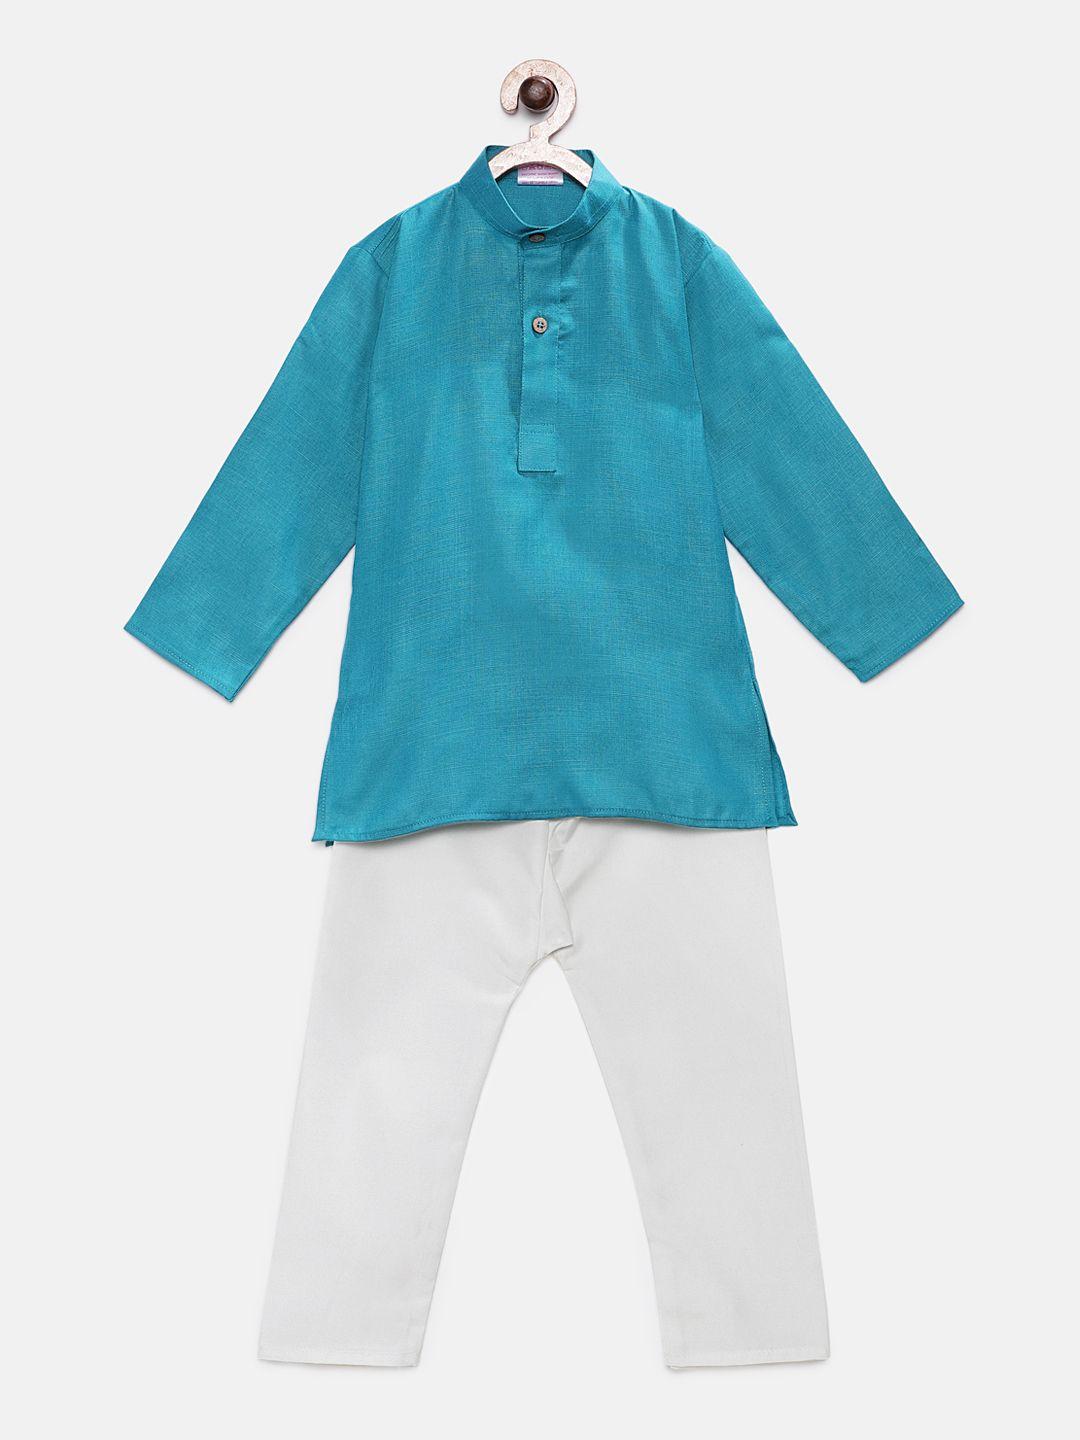 ridokidz boys turquoise blue & white solid kurta with pyjamas